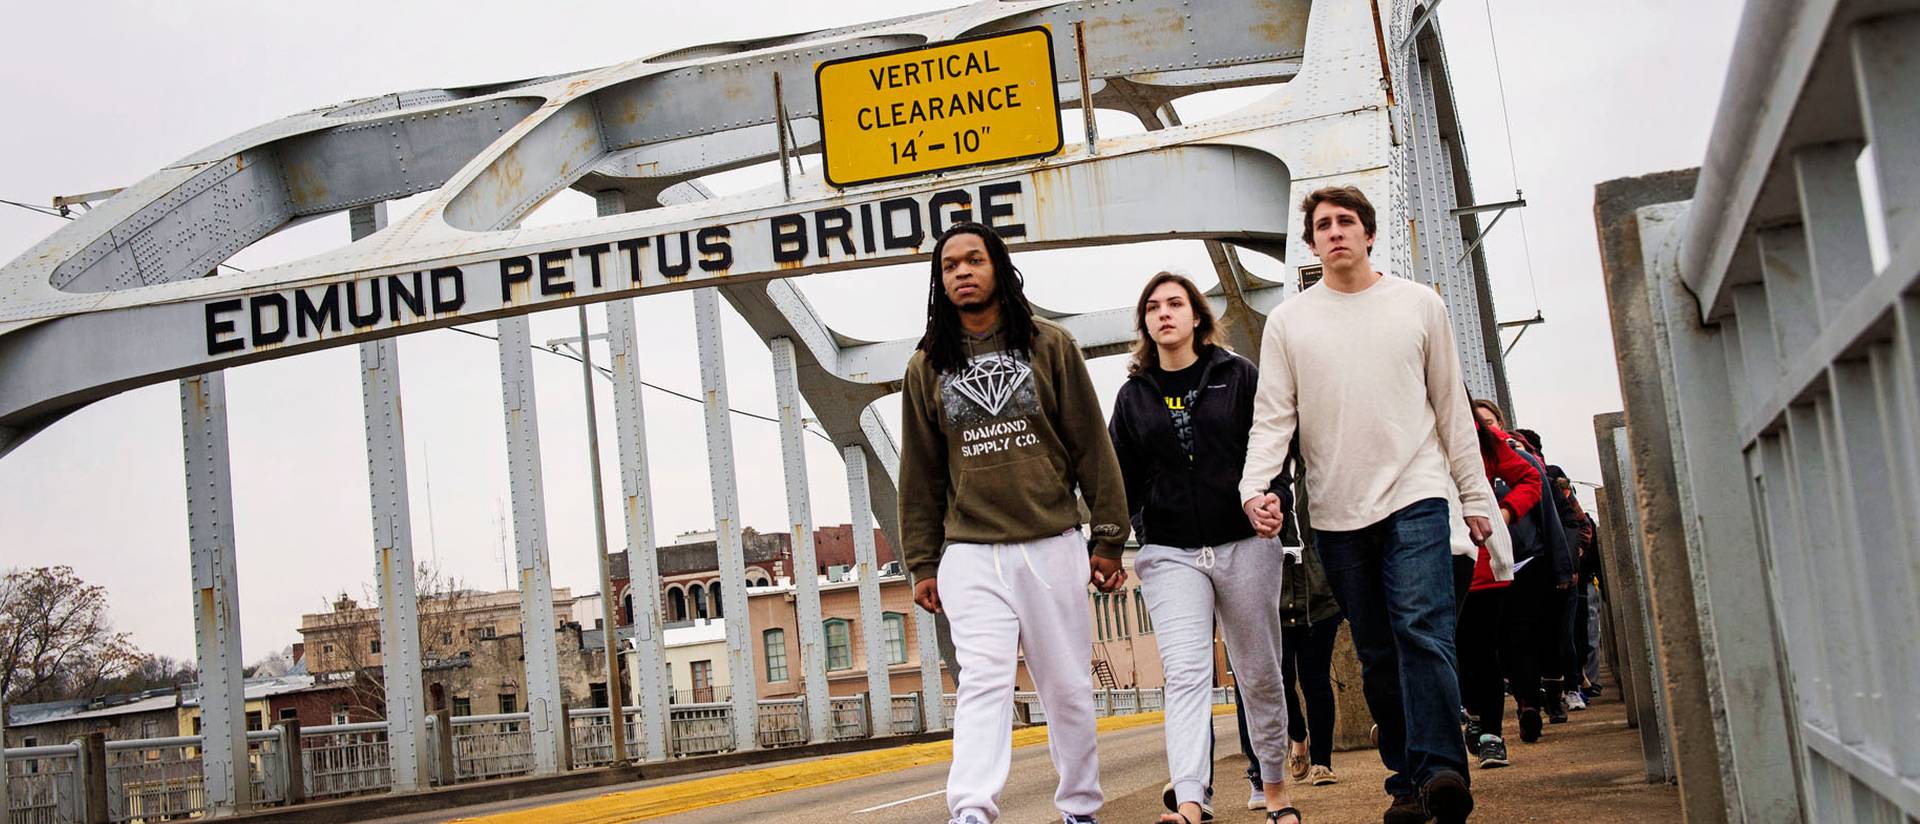 UW-Eau Claire students crossing historic Pettus Bridge in Selma, Alabama